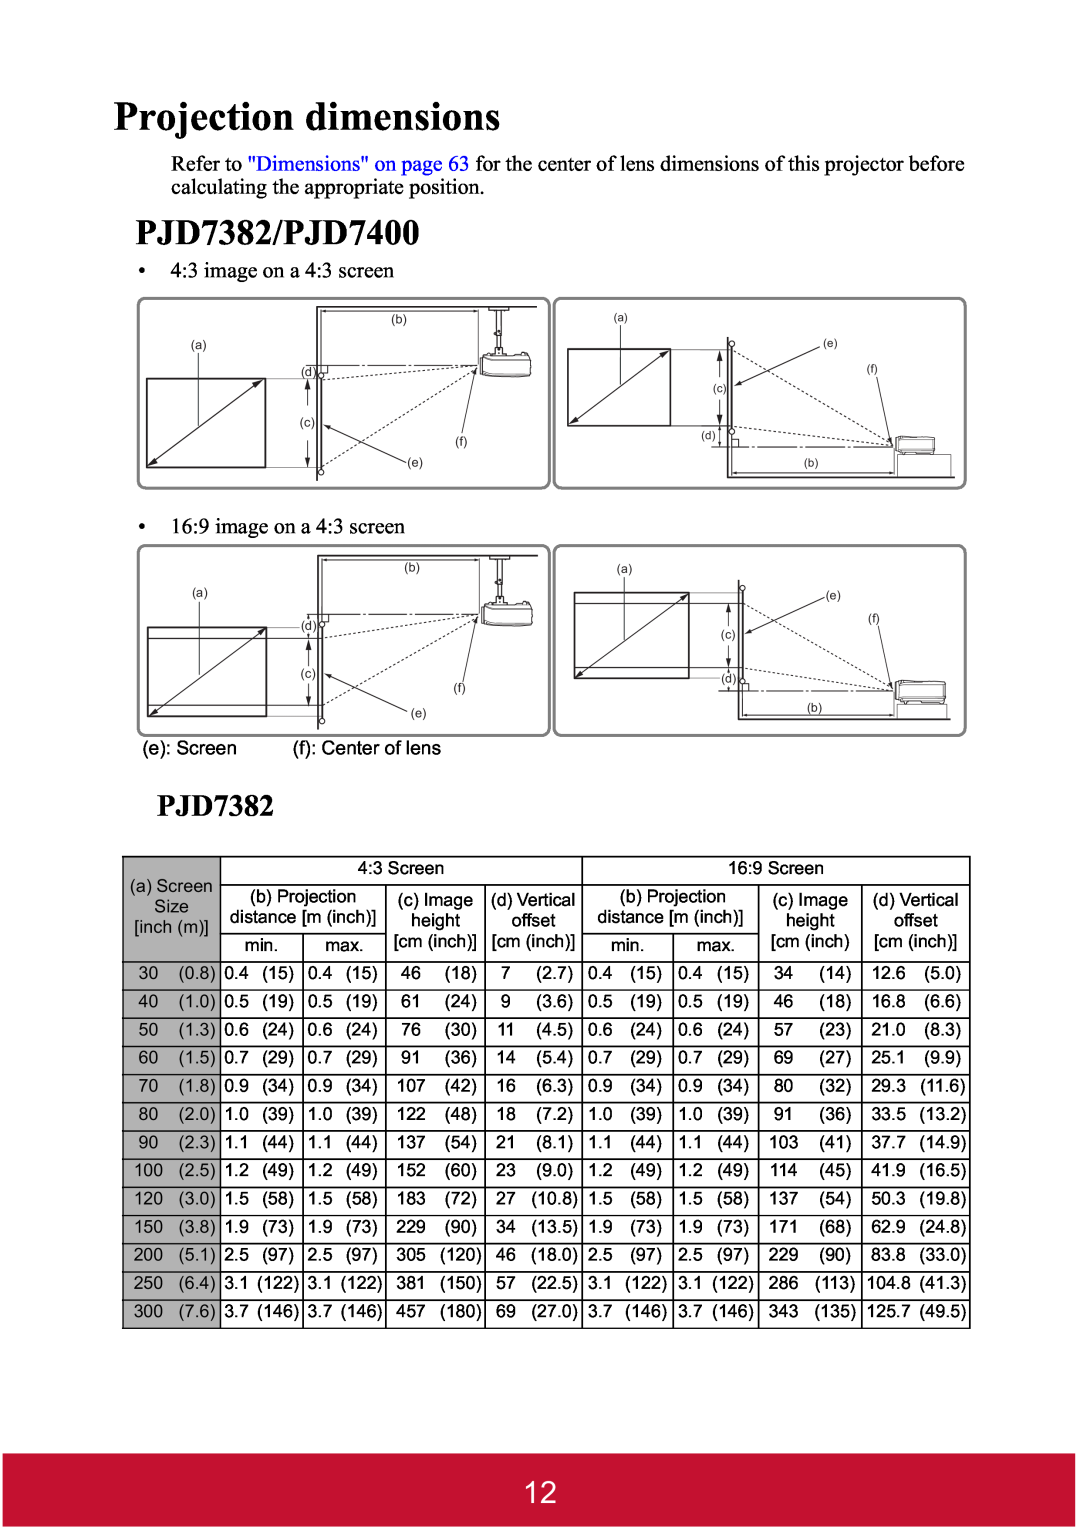 ViewSonic PJD7400W warranty Projection dimensions, PJD7382/PJD7400, image on a 43 screen, e Screen, f Center of lens 